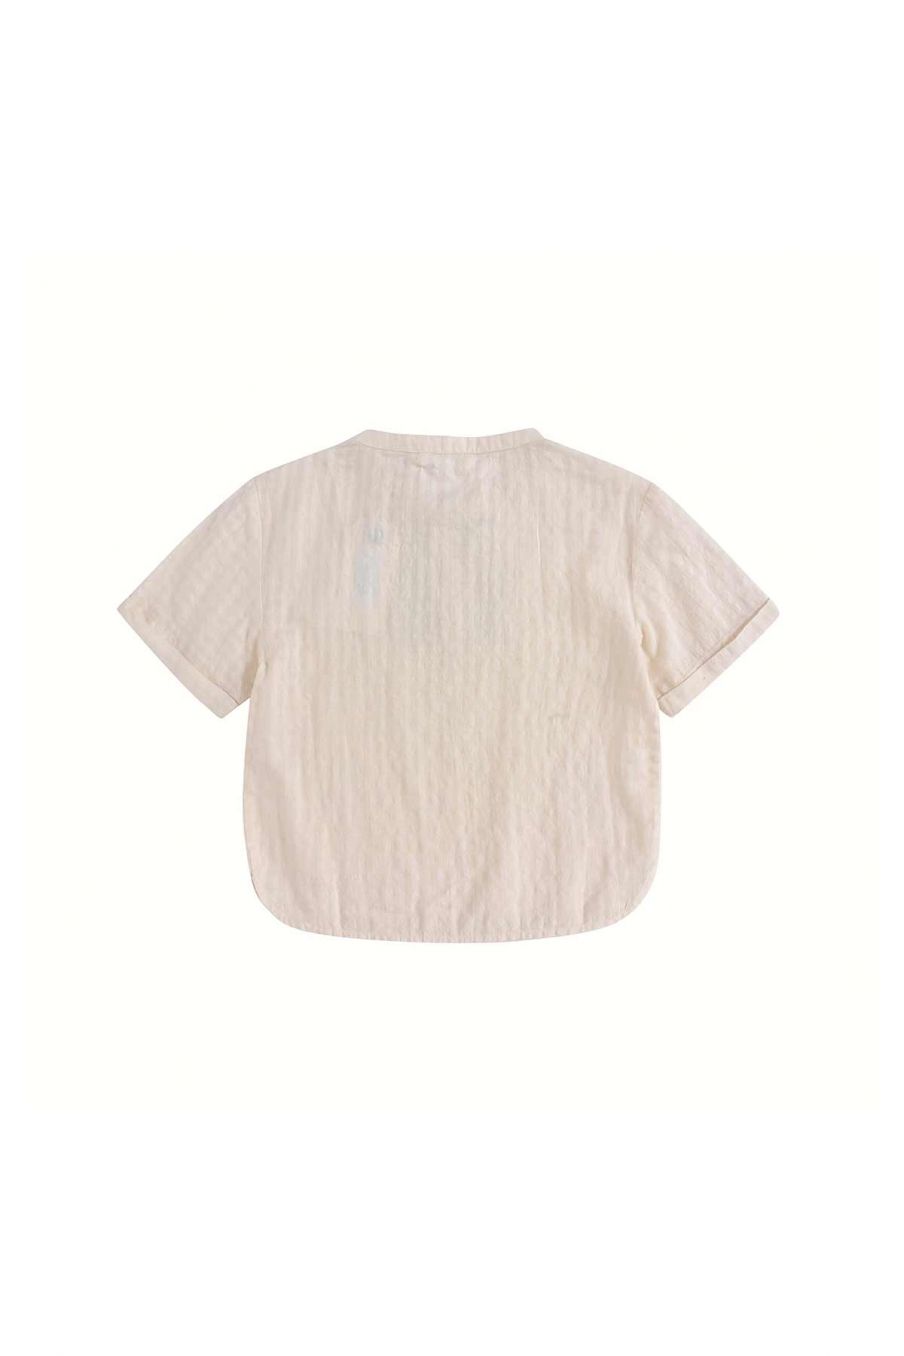 bebe-garcon-chemise-odalio-off-white